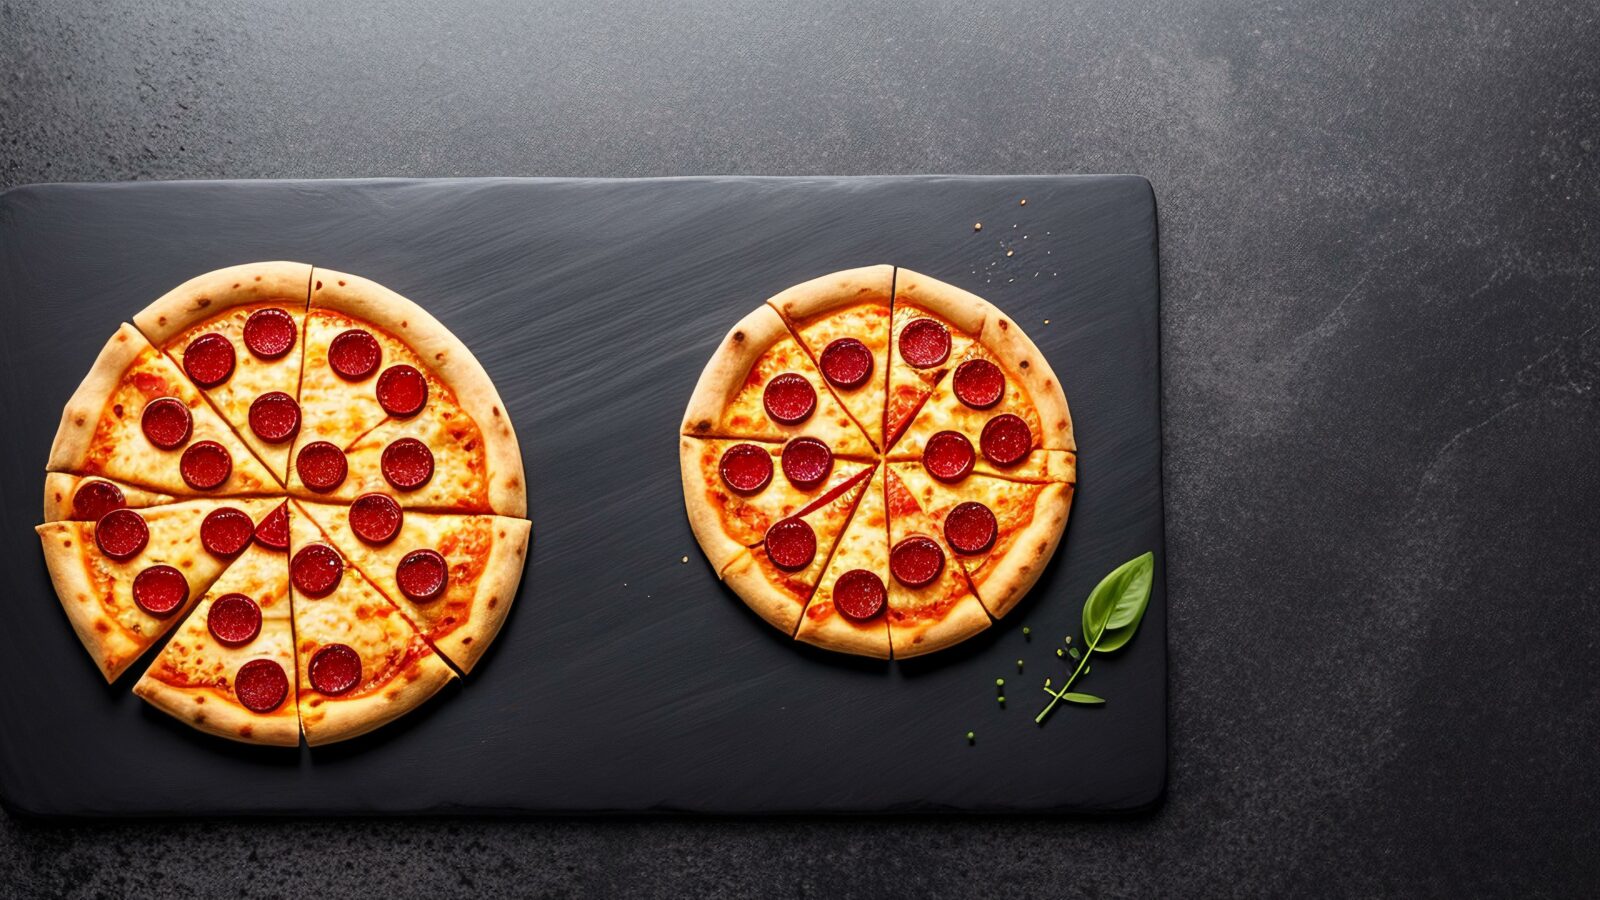 Камеди клаб доставка пиццы. Пицца с паром. На паре с пиццей. Пара пицца вид сверху. 3 Пиццы 4 сыра камеди.